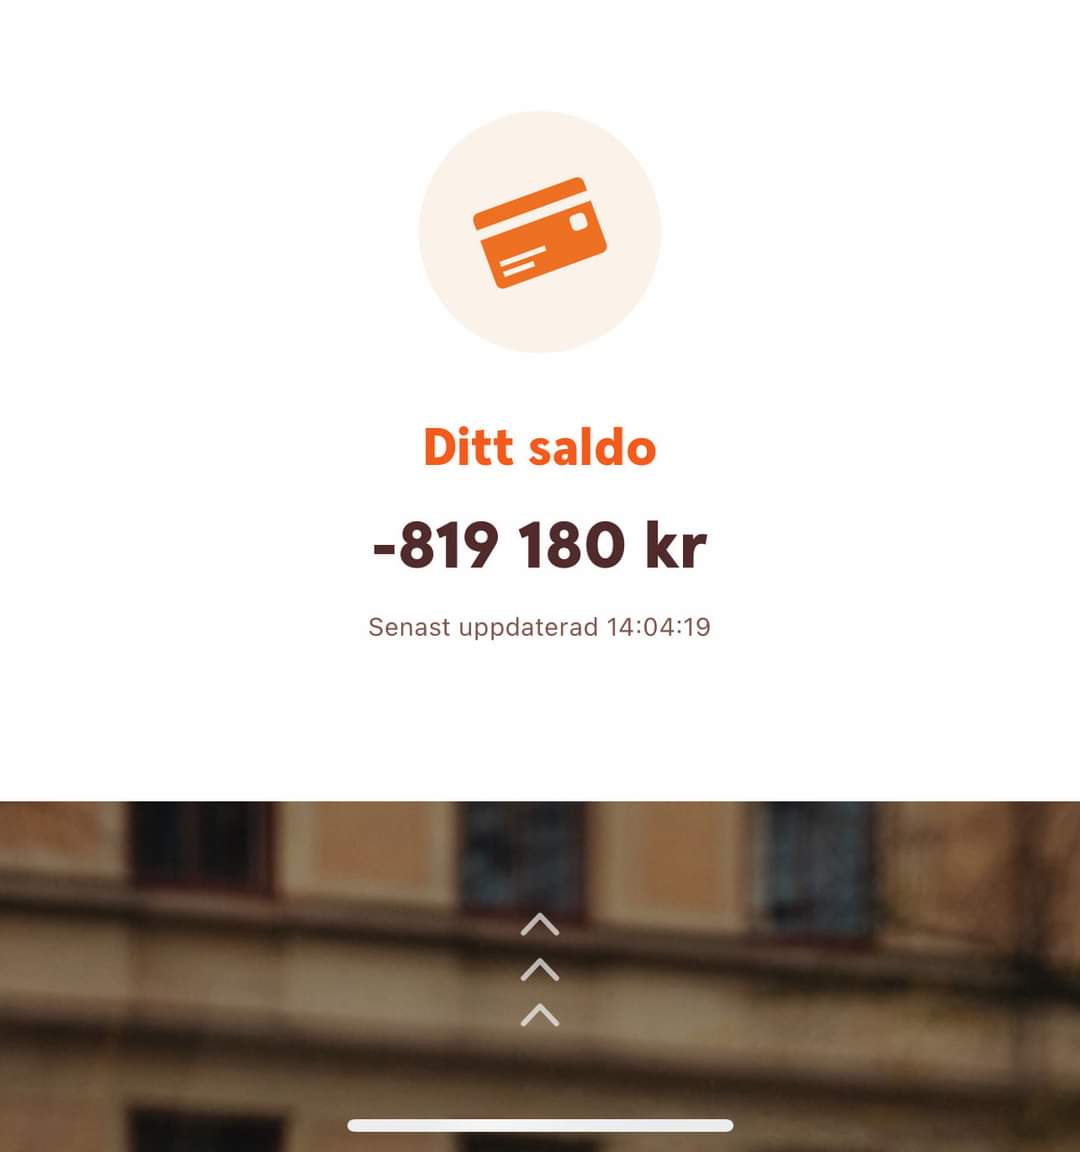 @radiosweden @madisarmami 

Thats a swedbank account to wake up with.